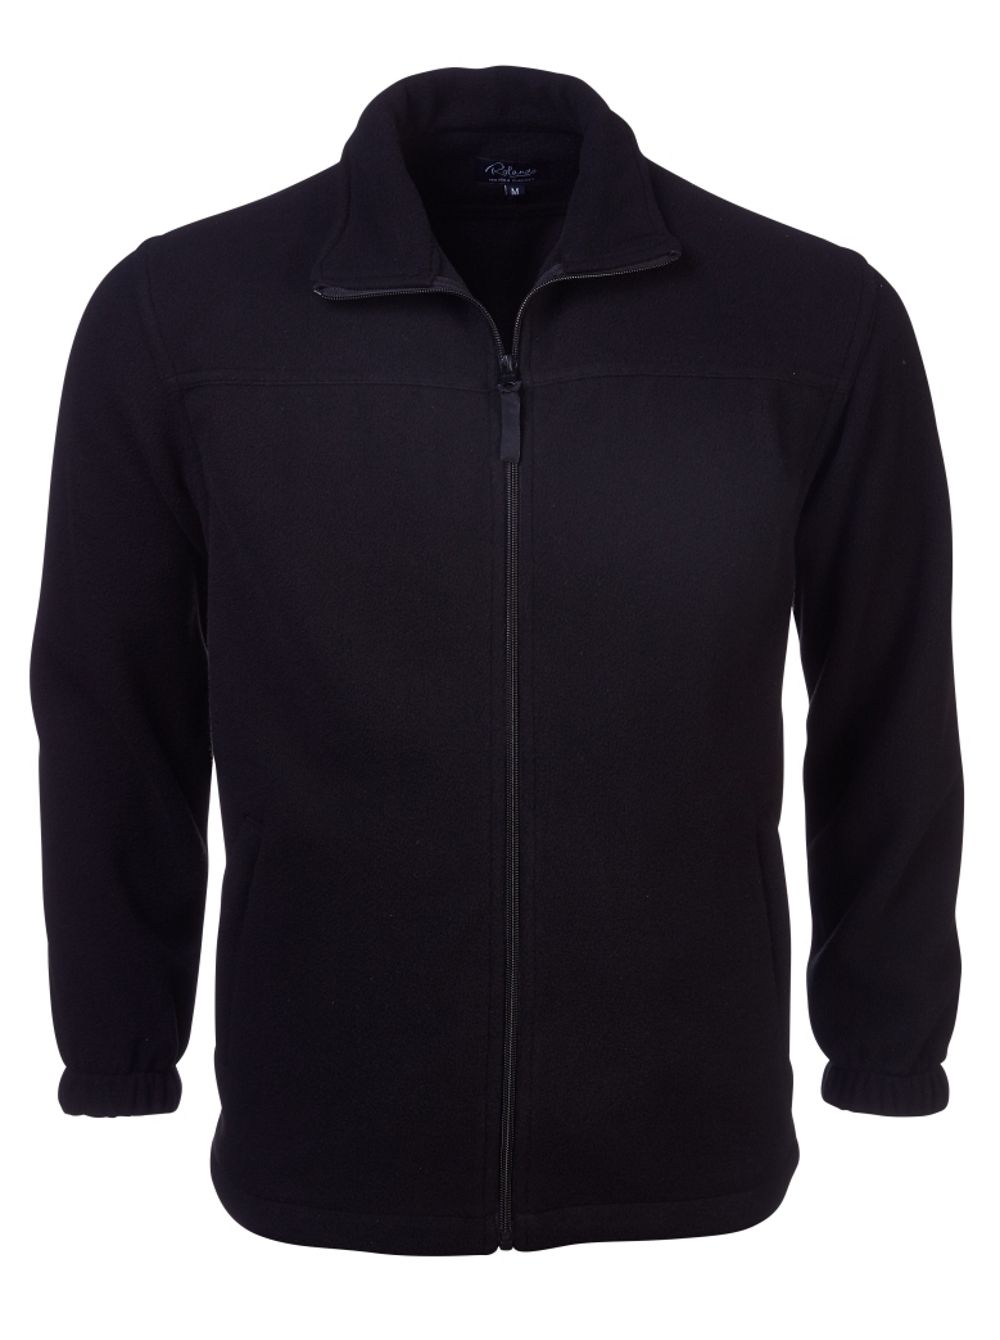 Men's Shane Polar Fleece Jacket Black - Kallie Khaki Online Store